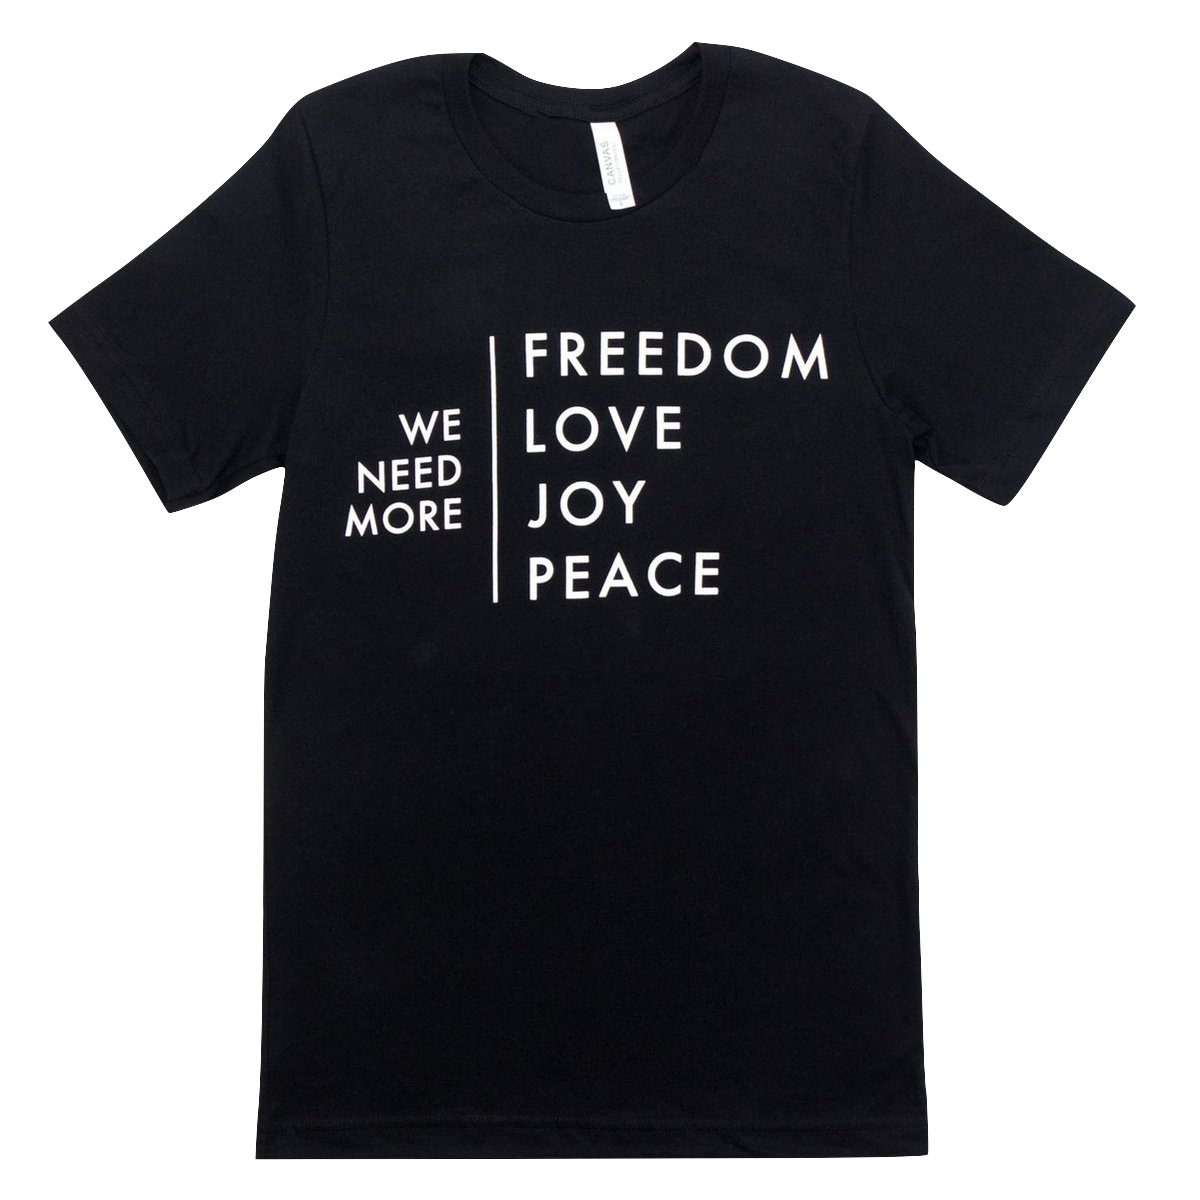 We Need More Freedom, Love, Joy, Peace Tee